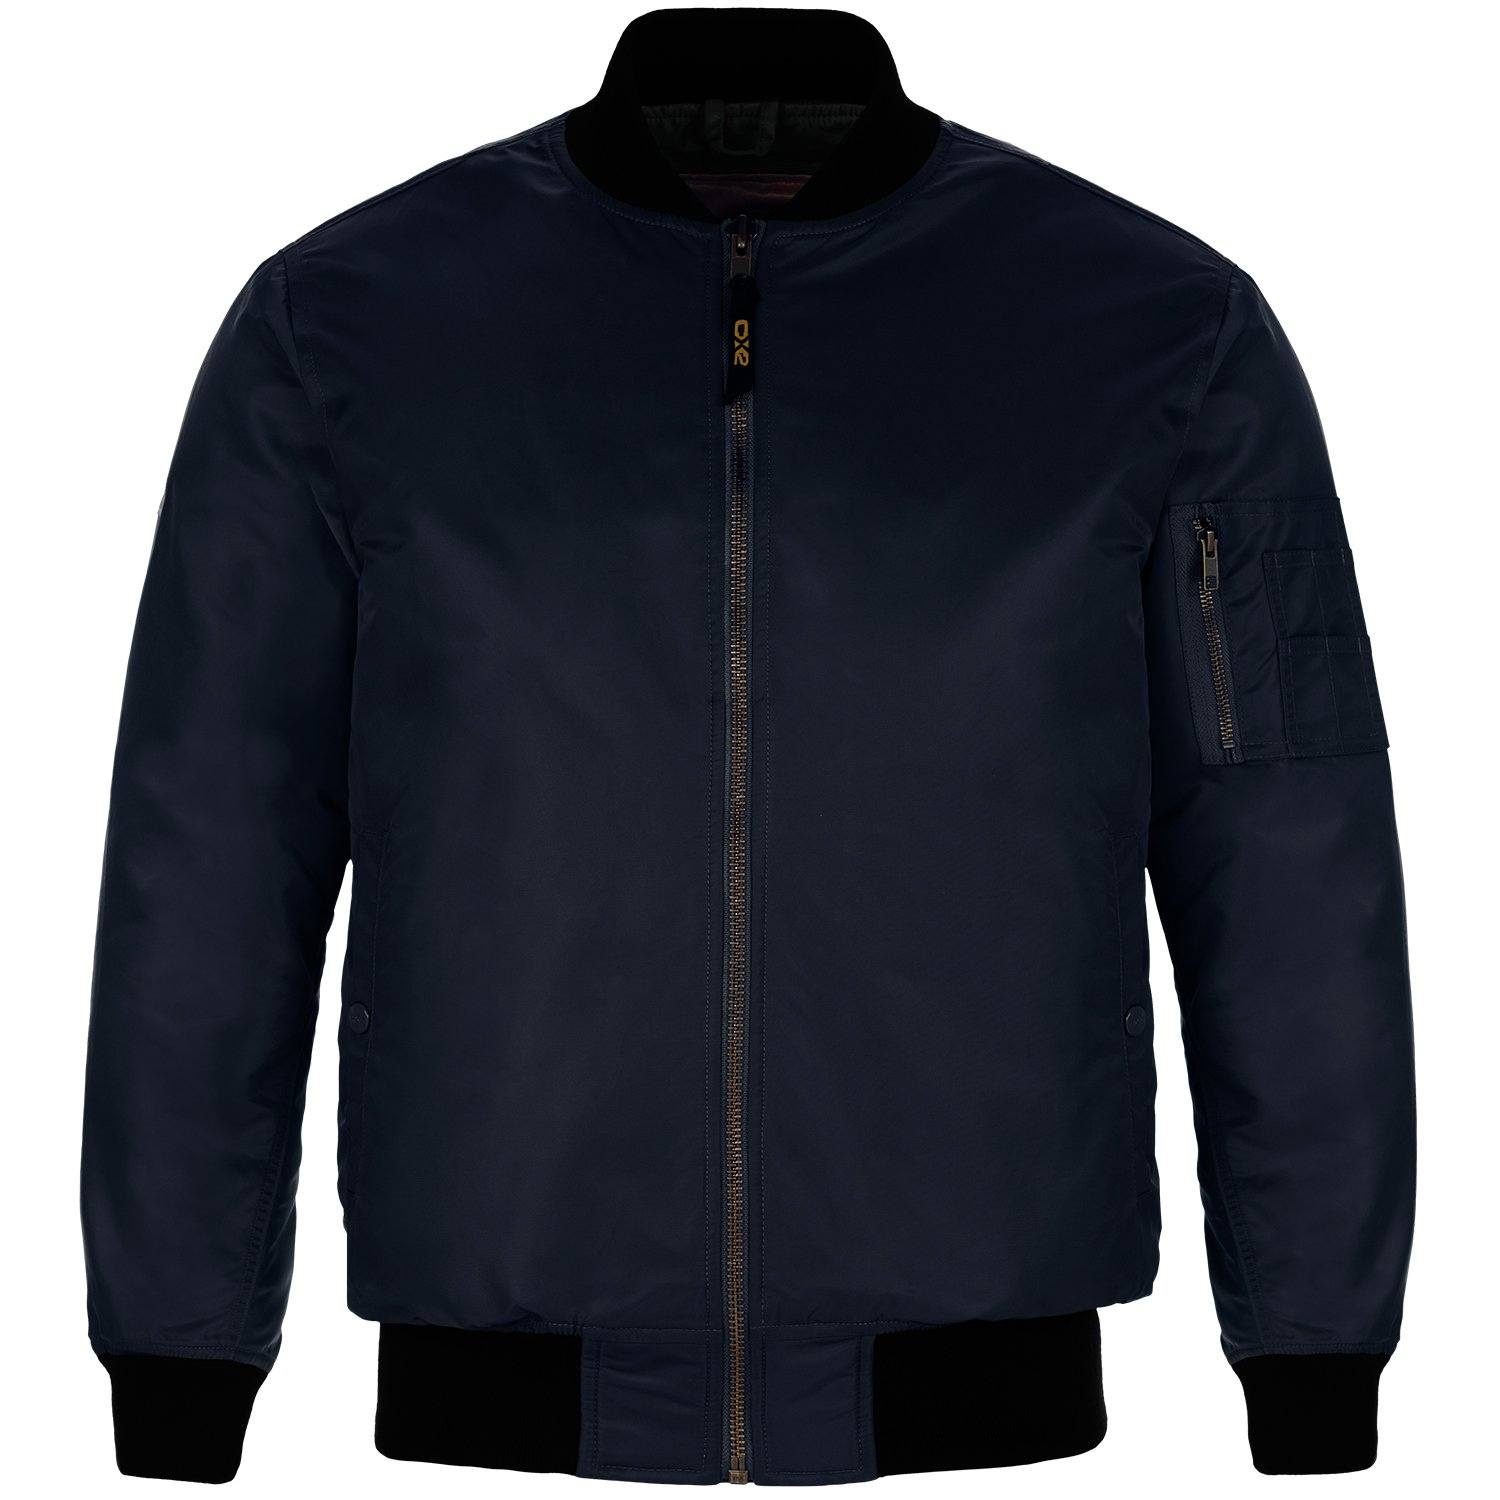 Canada Sportswear  - Bomber: Non-insulated - L02130 - Navy